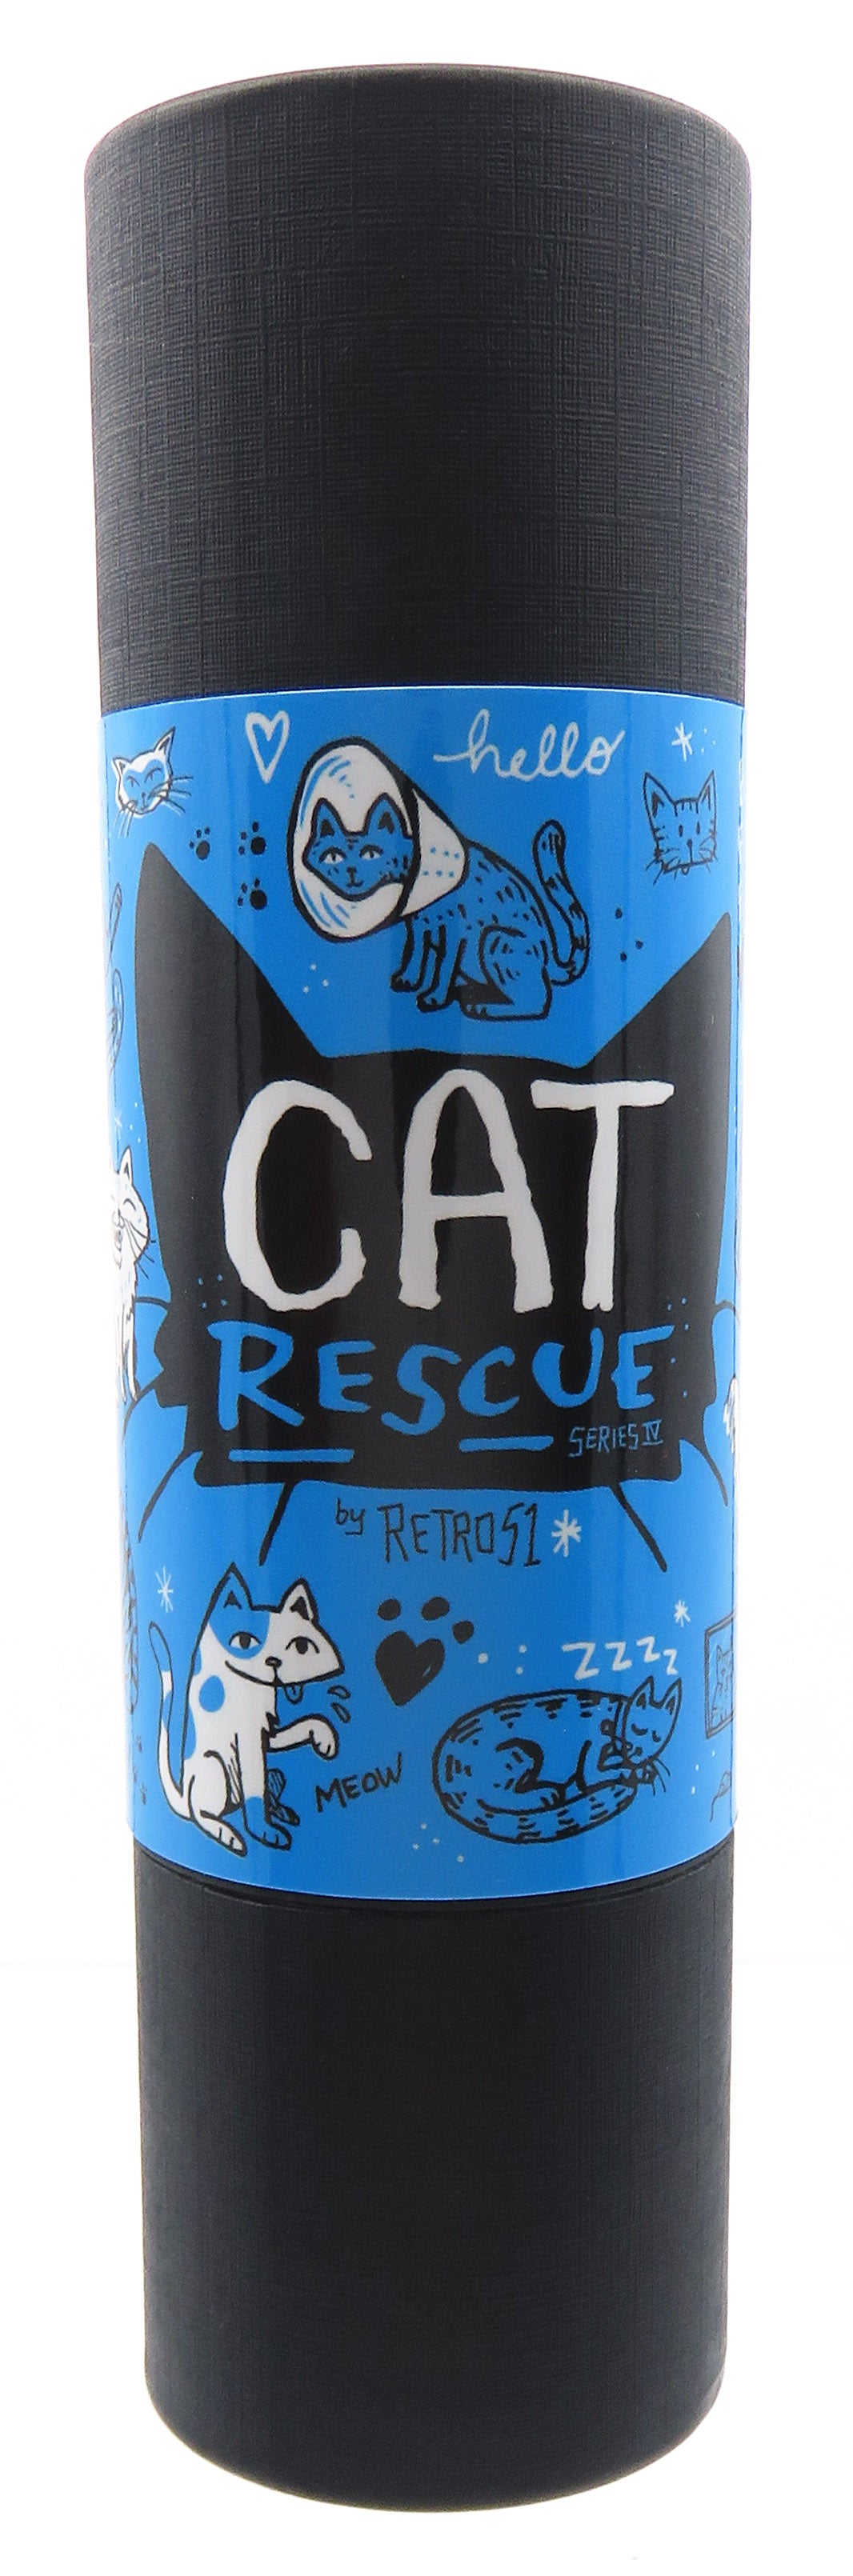 Retro 51 Tornado Ballpoint Pen - Cat Rescue (Series 4)